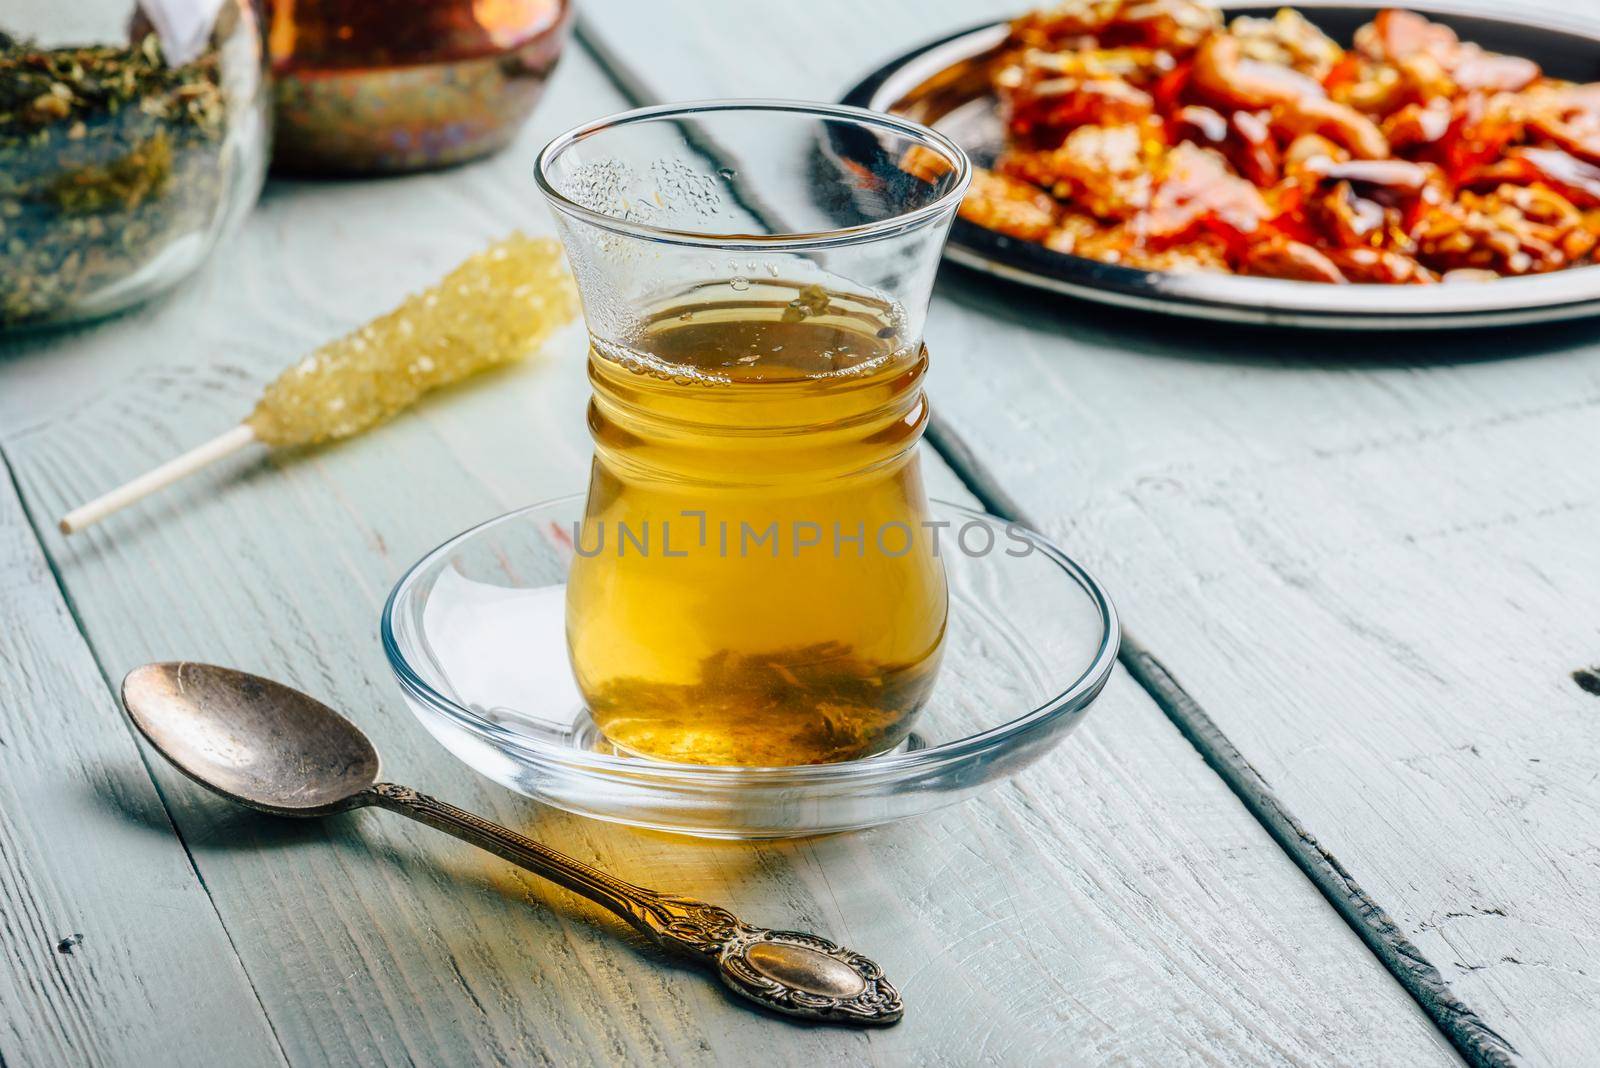 Tea in armudu with oriental delights by Seva_blsv